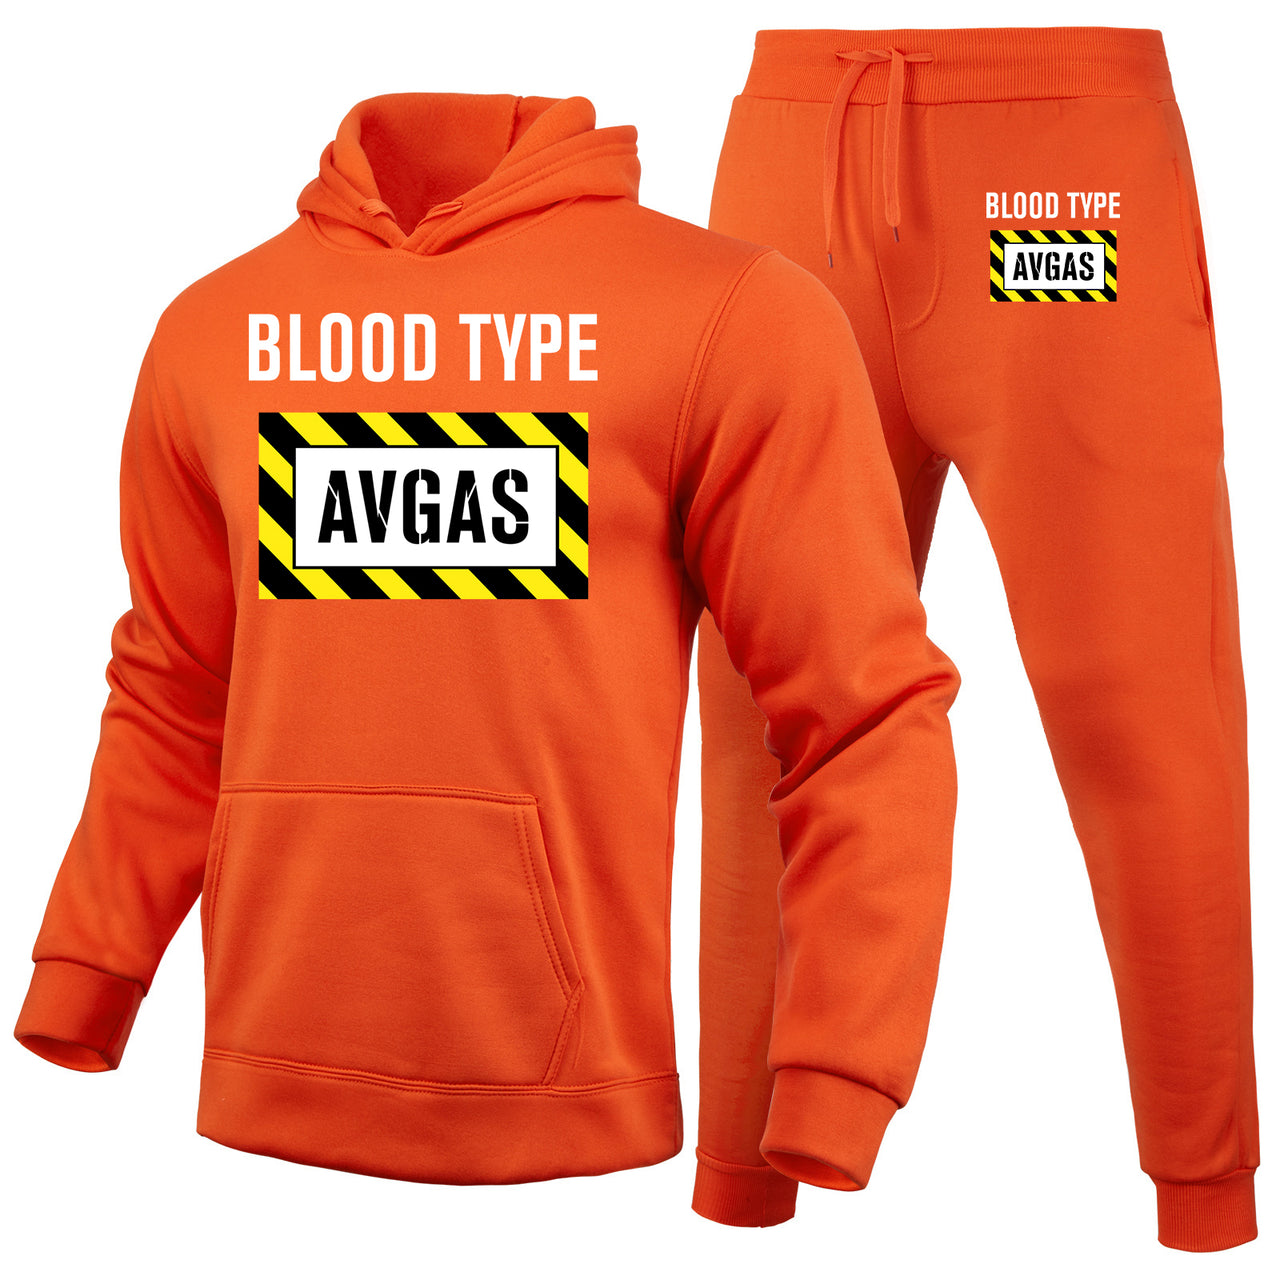 Blood Type AVGAS Designed Hoodies & Sweatpants Set